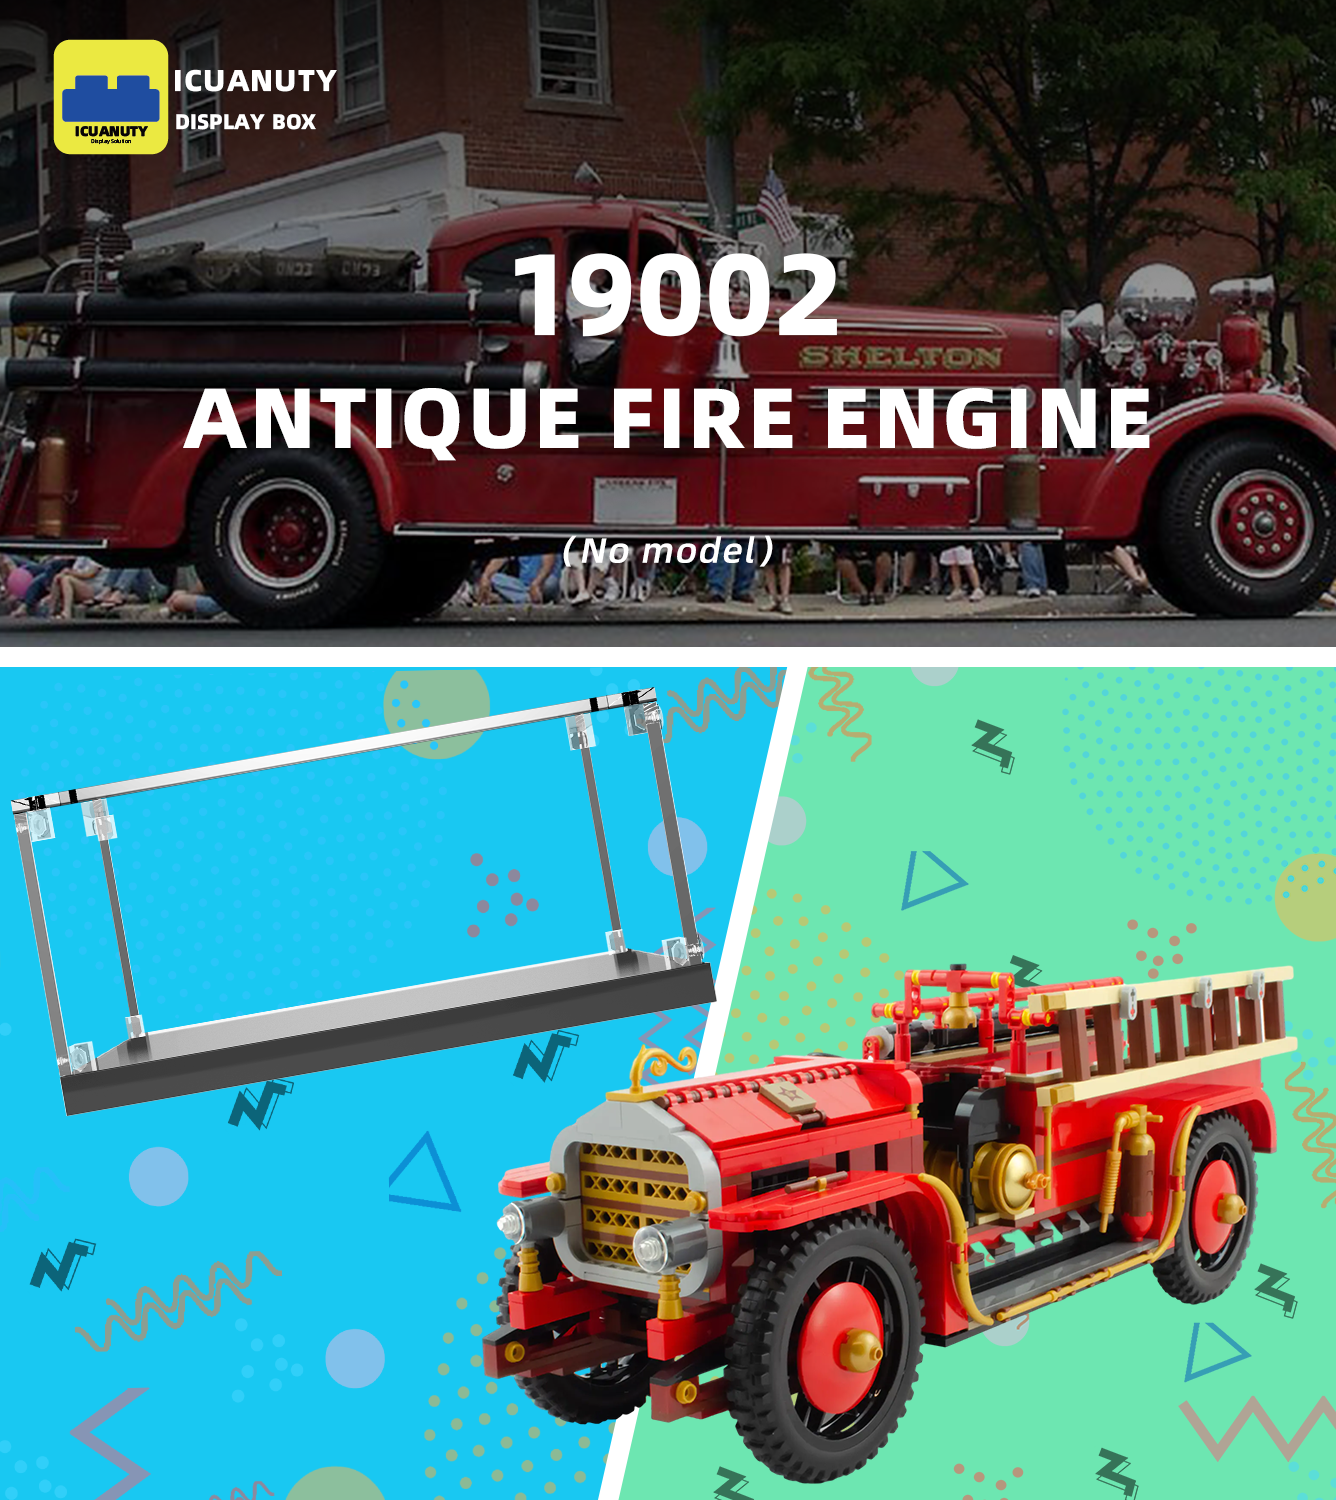 Display Case for Lego Bricklink Antique Fire Engine BL 19002